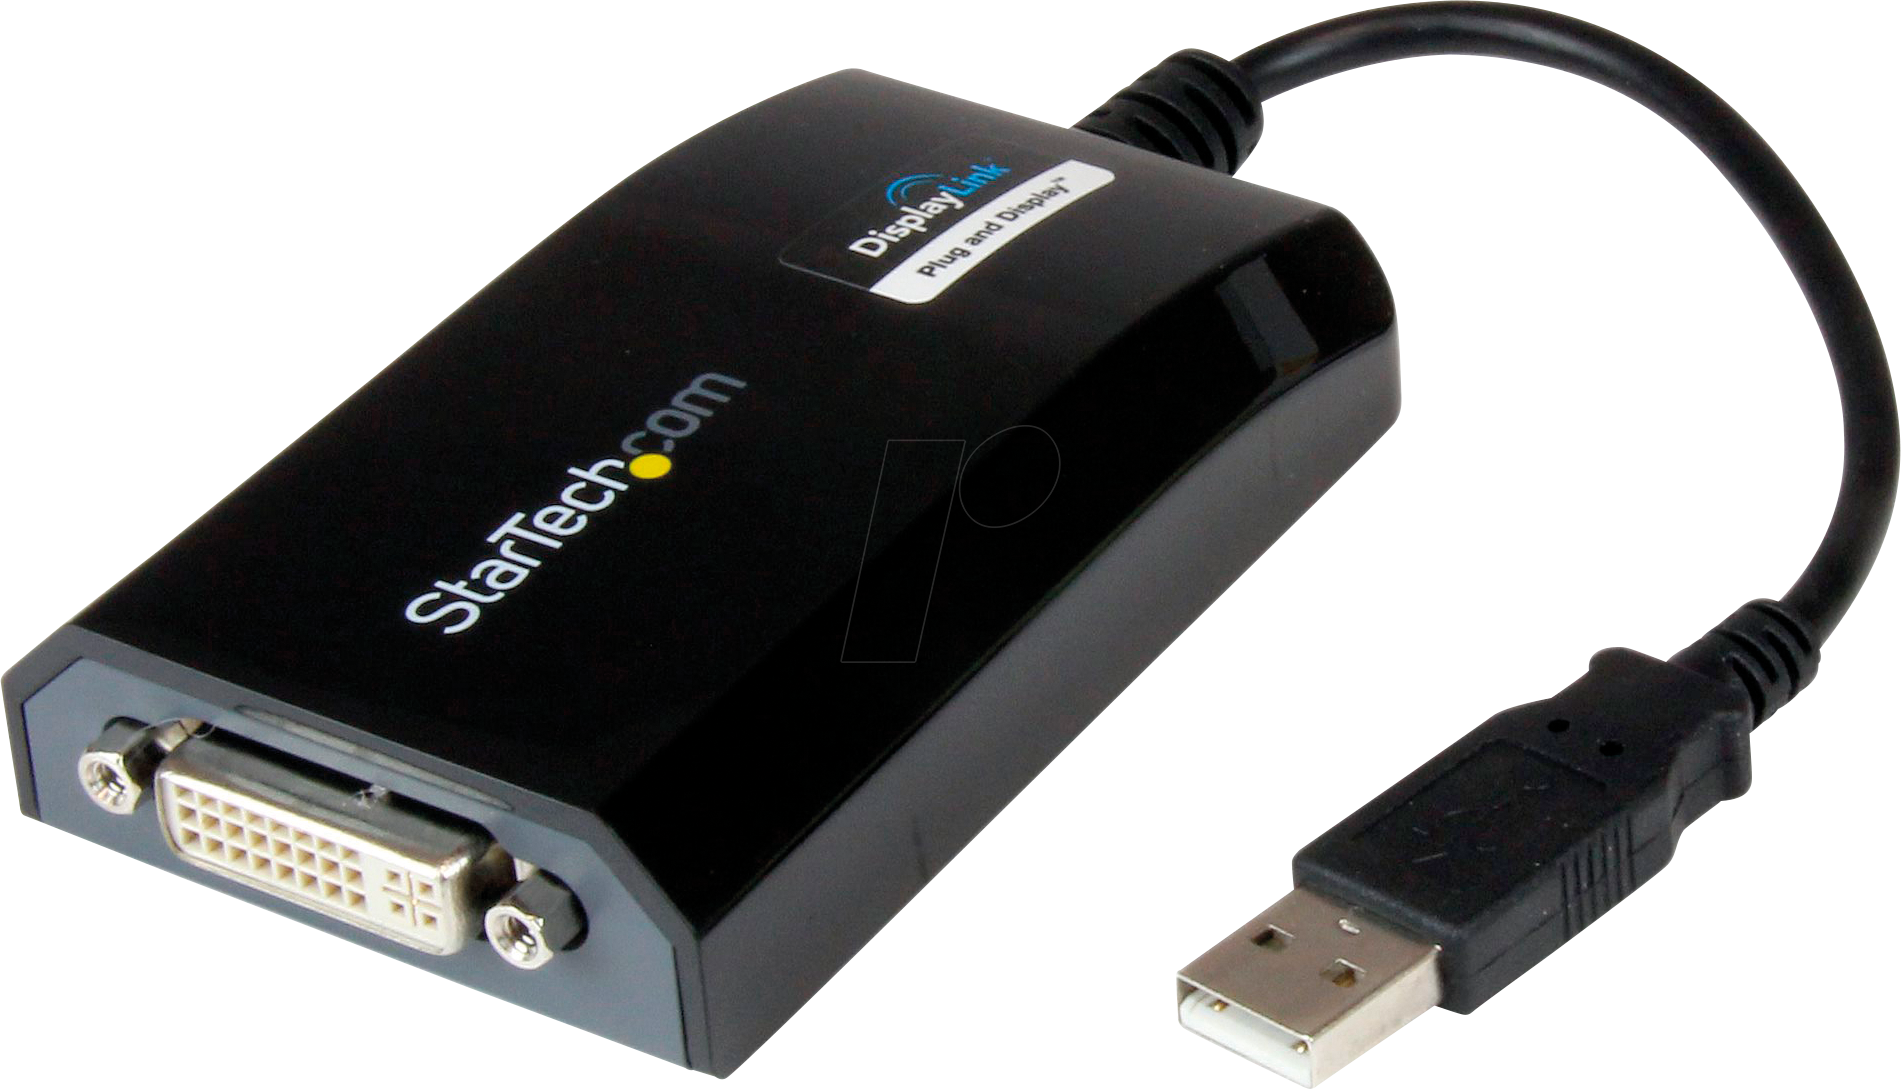 ST USB2DVIPRO2 - Adapter USB-A > DVI-I, 1920 x 1200 von StarTech.com